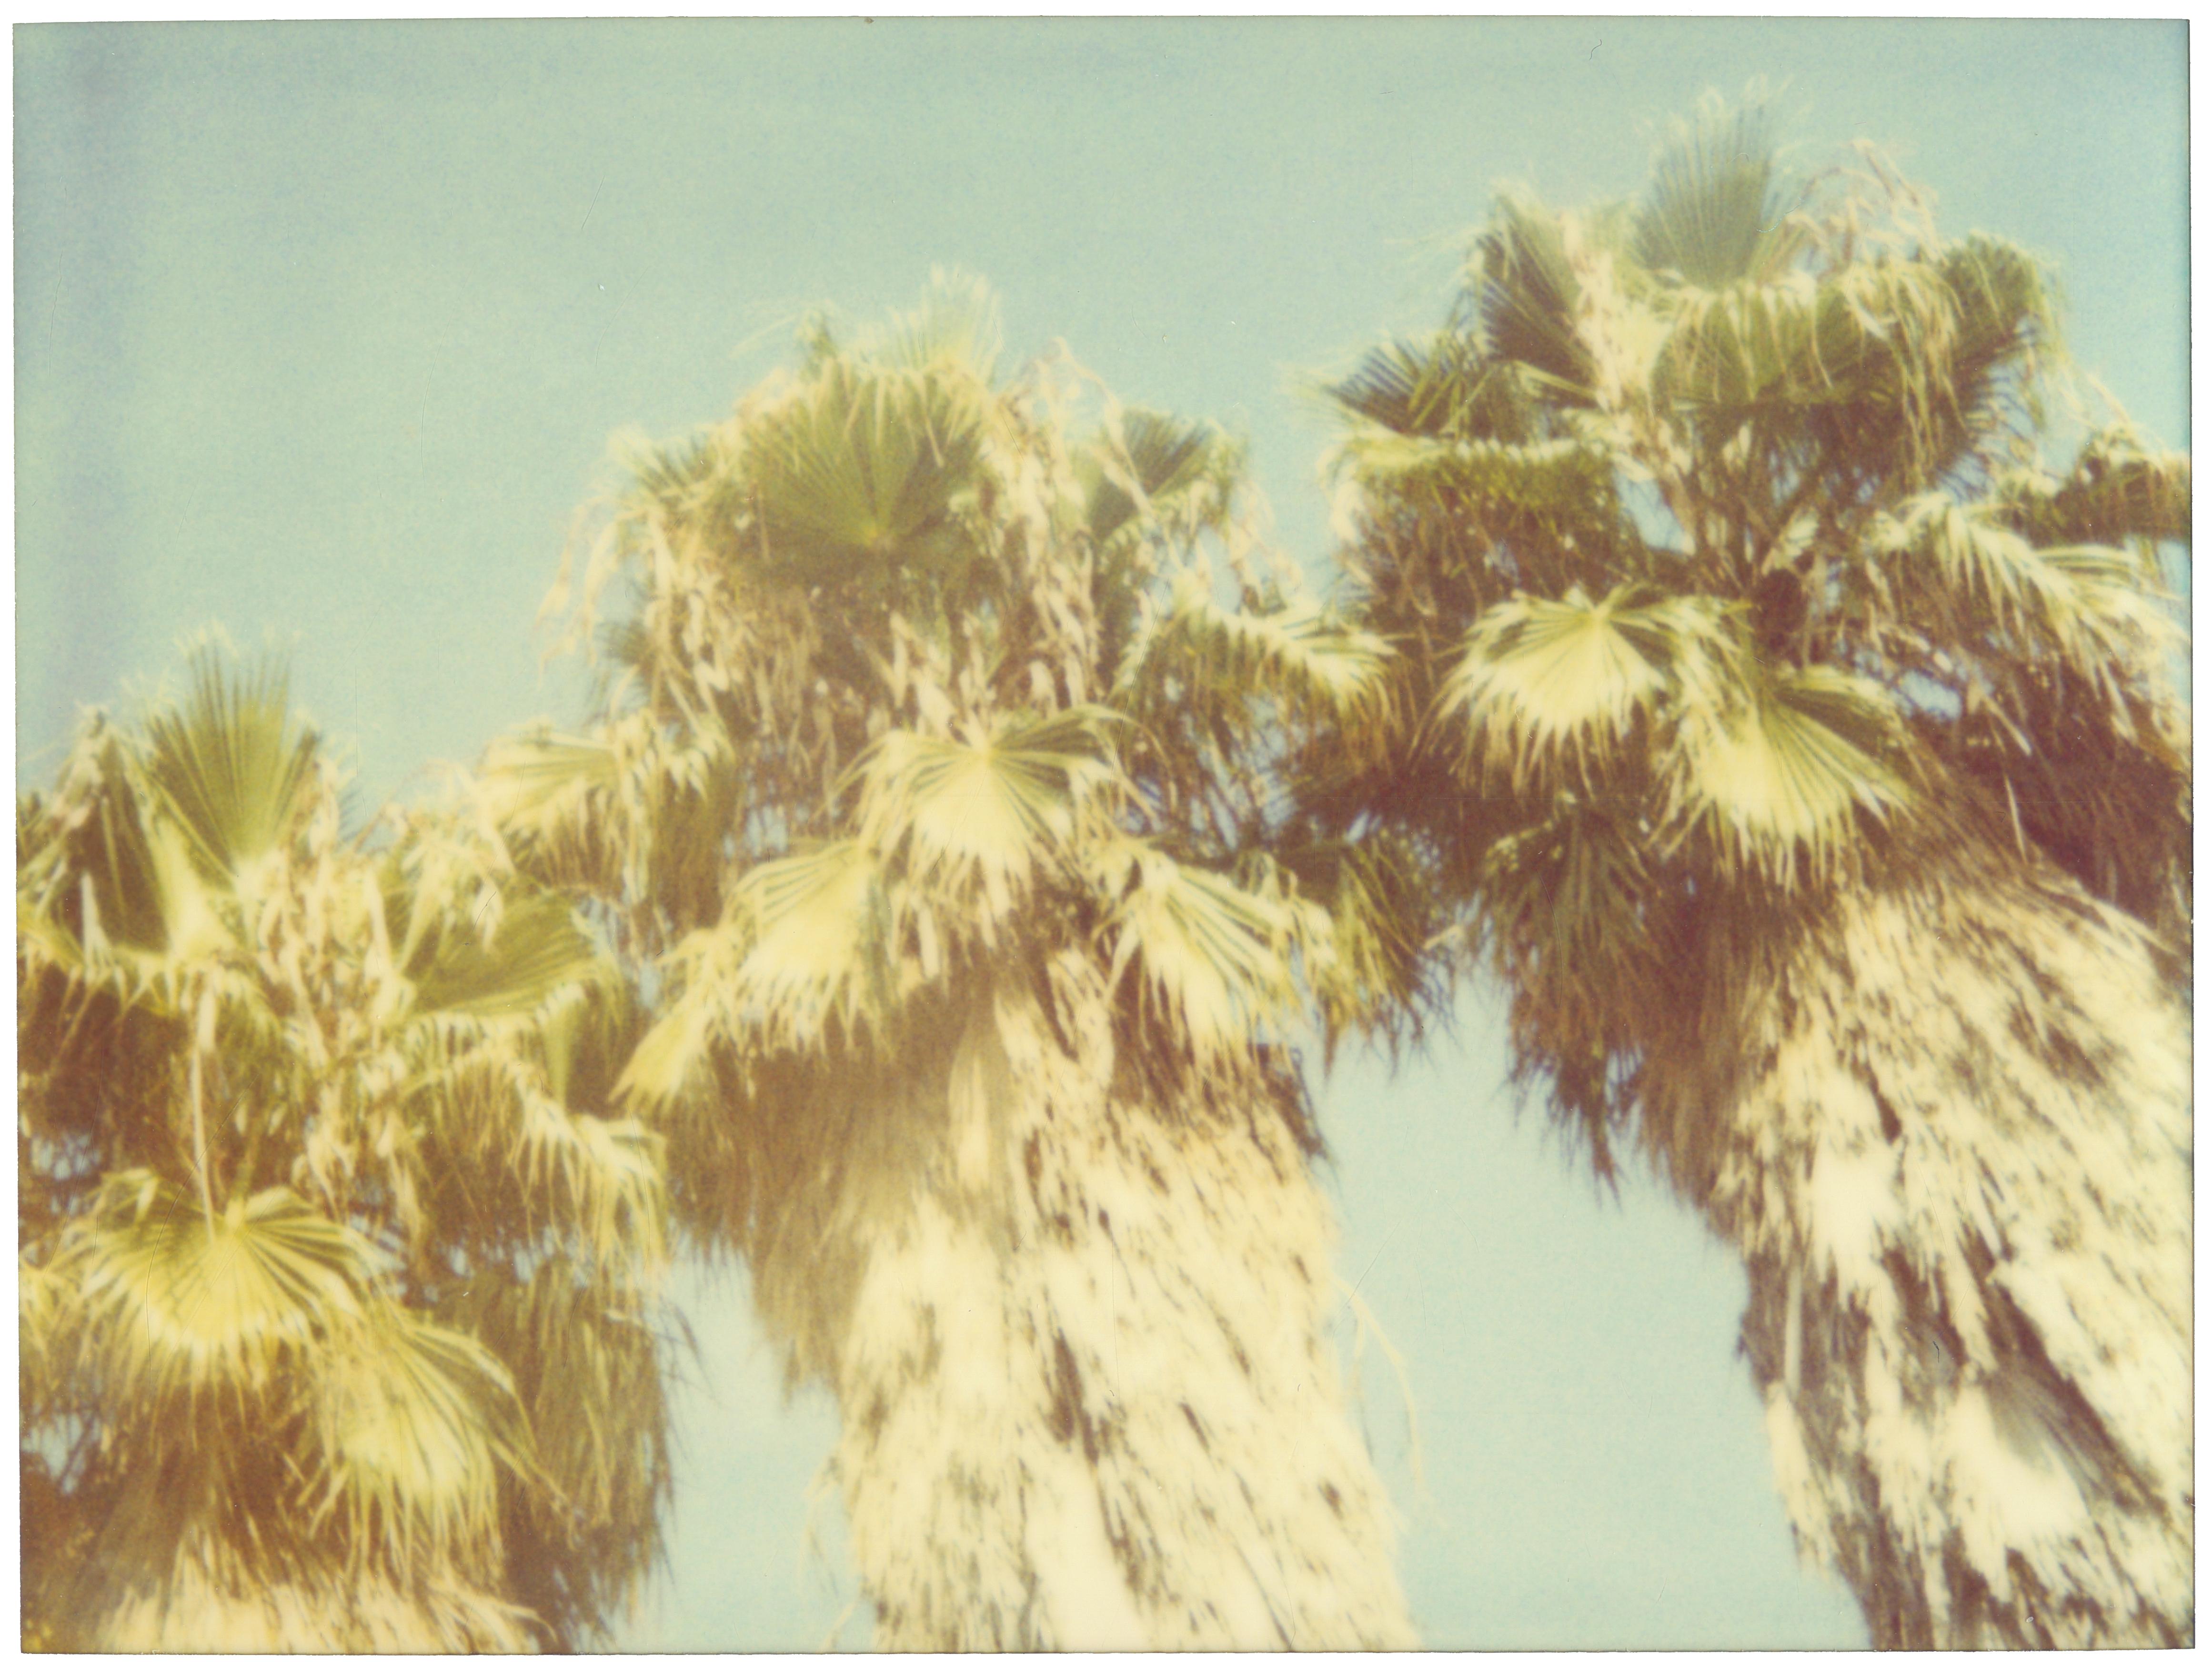 Stefanie Schneider Color Photograph - 3 Palm Trees (Stranger than Paradise) - analog